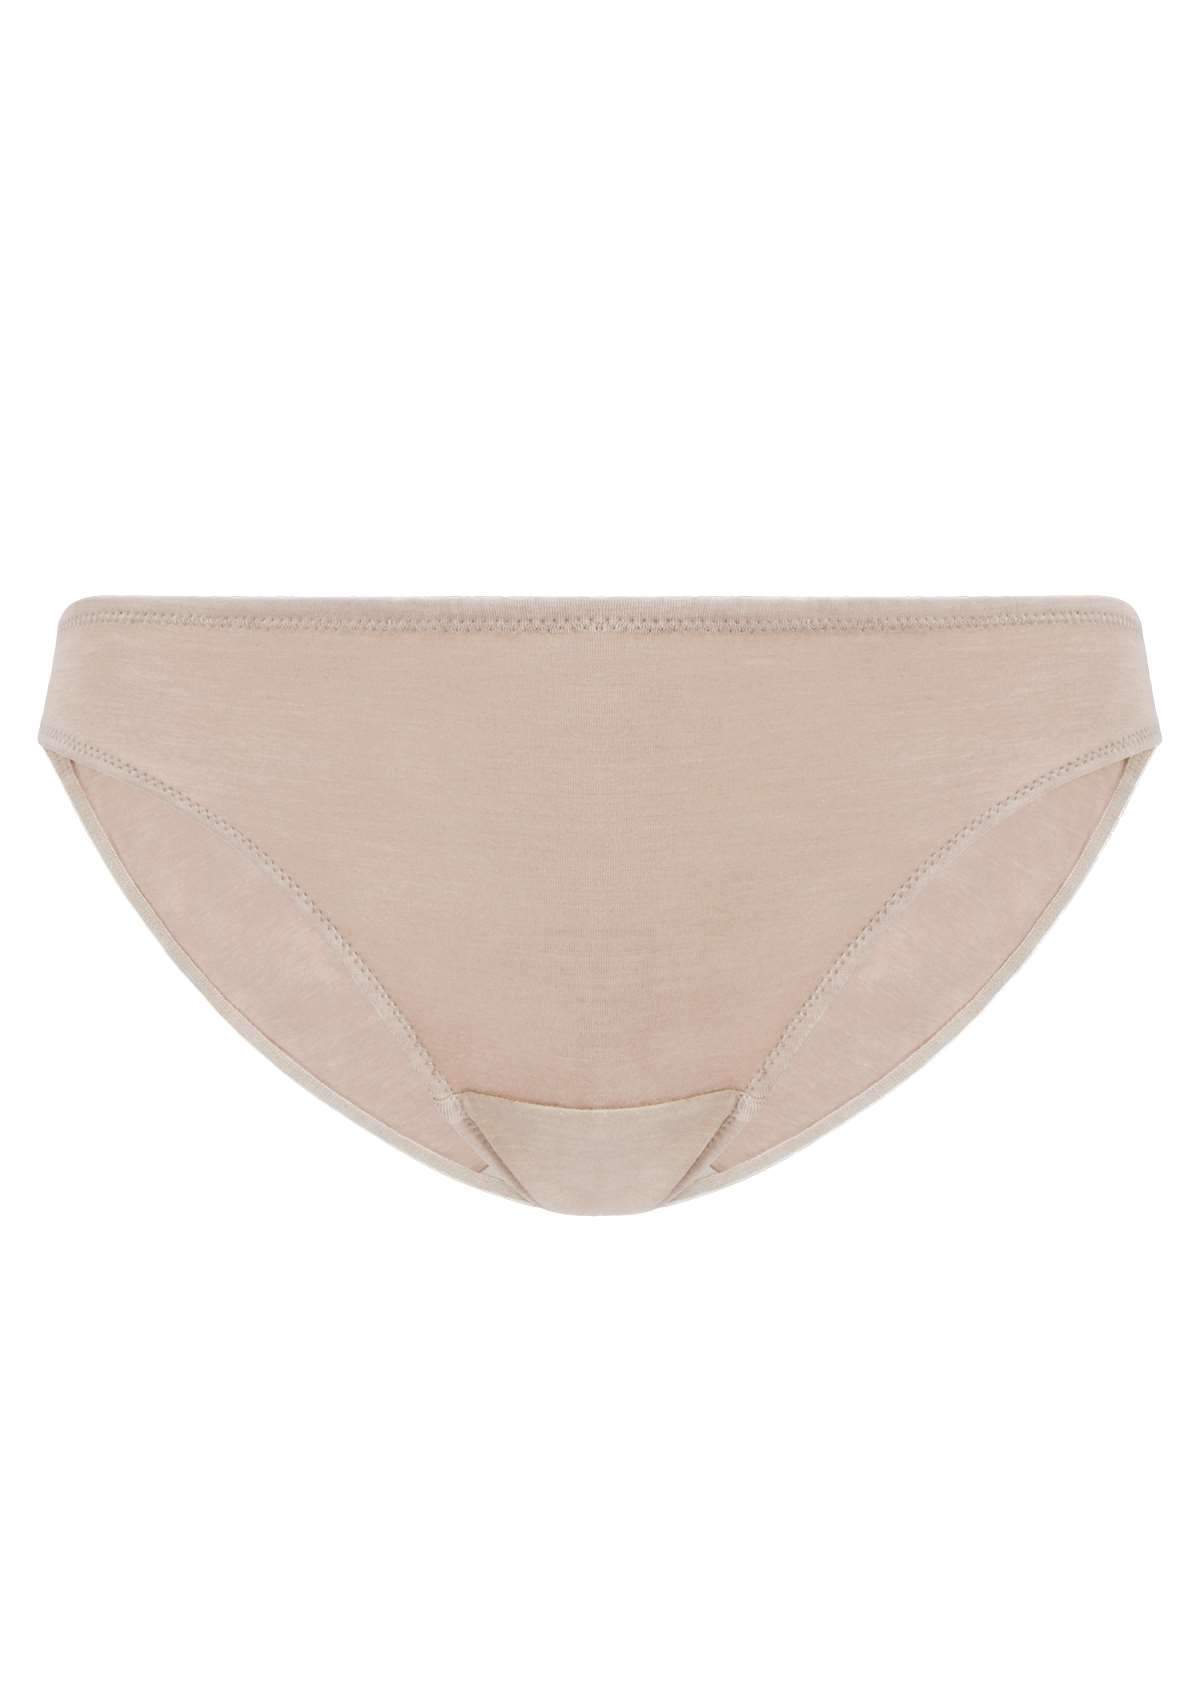 HSIA Comfort Cotton Mid-rise Bikini Panties 3 Pack - S / Black+Pink+Beige